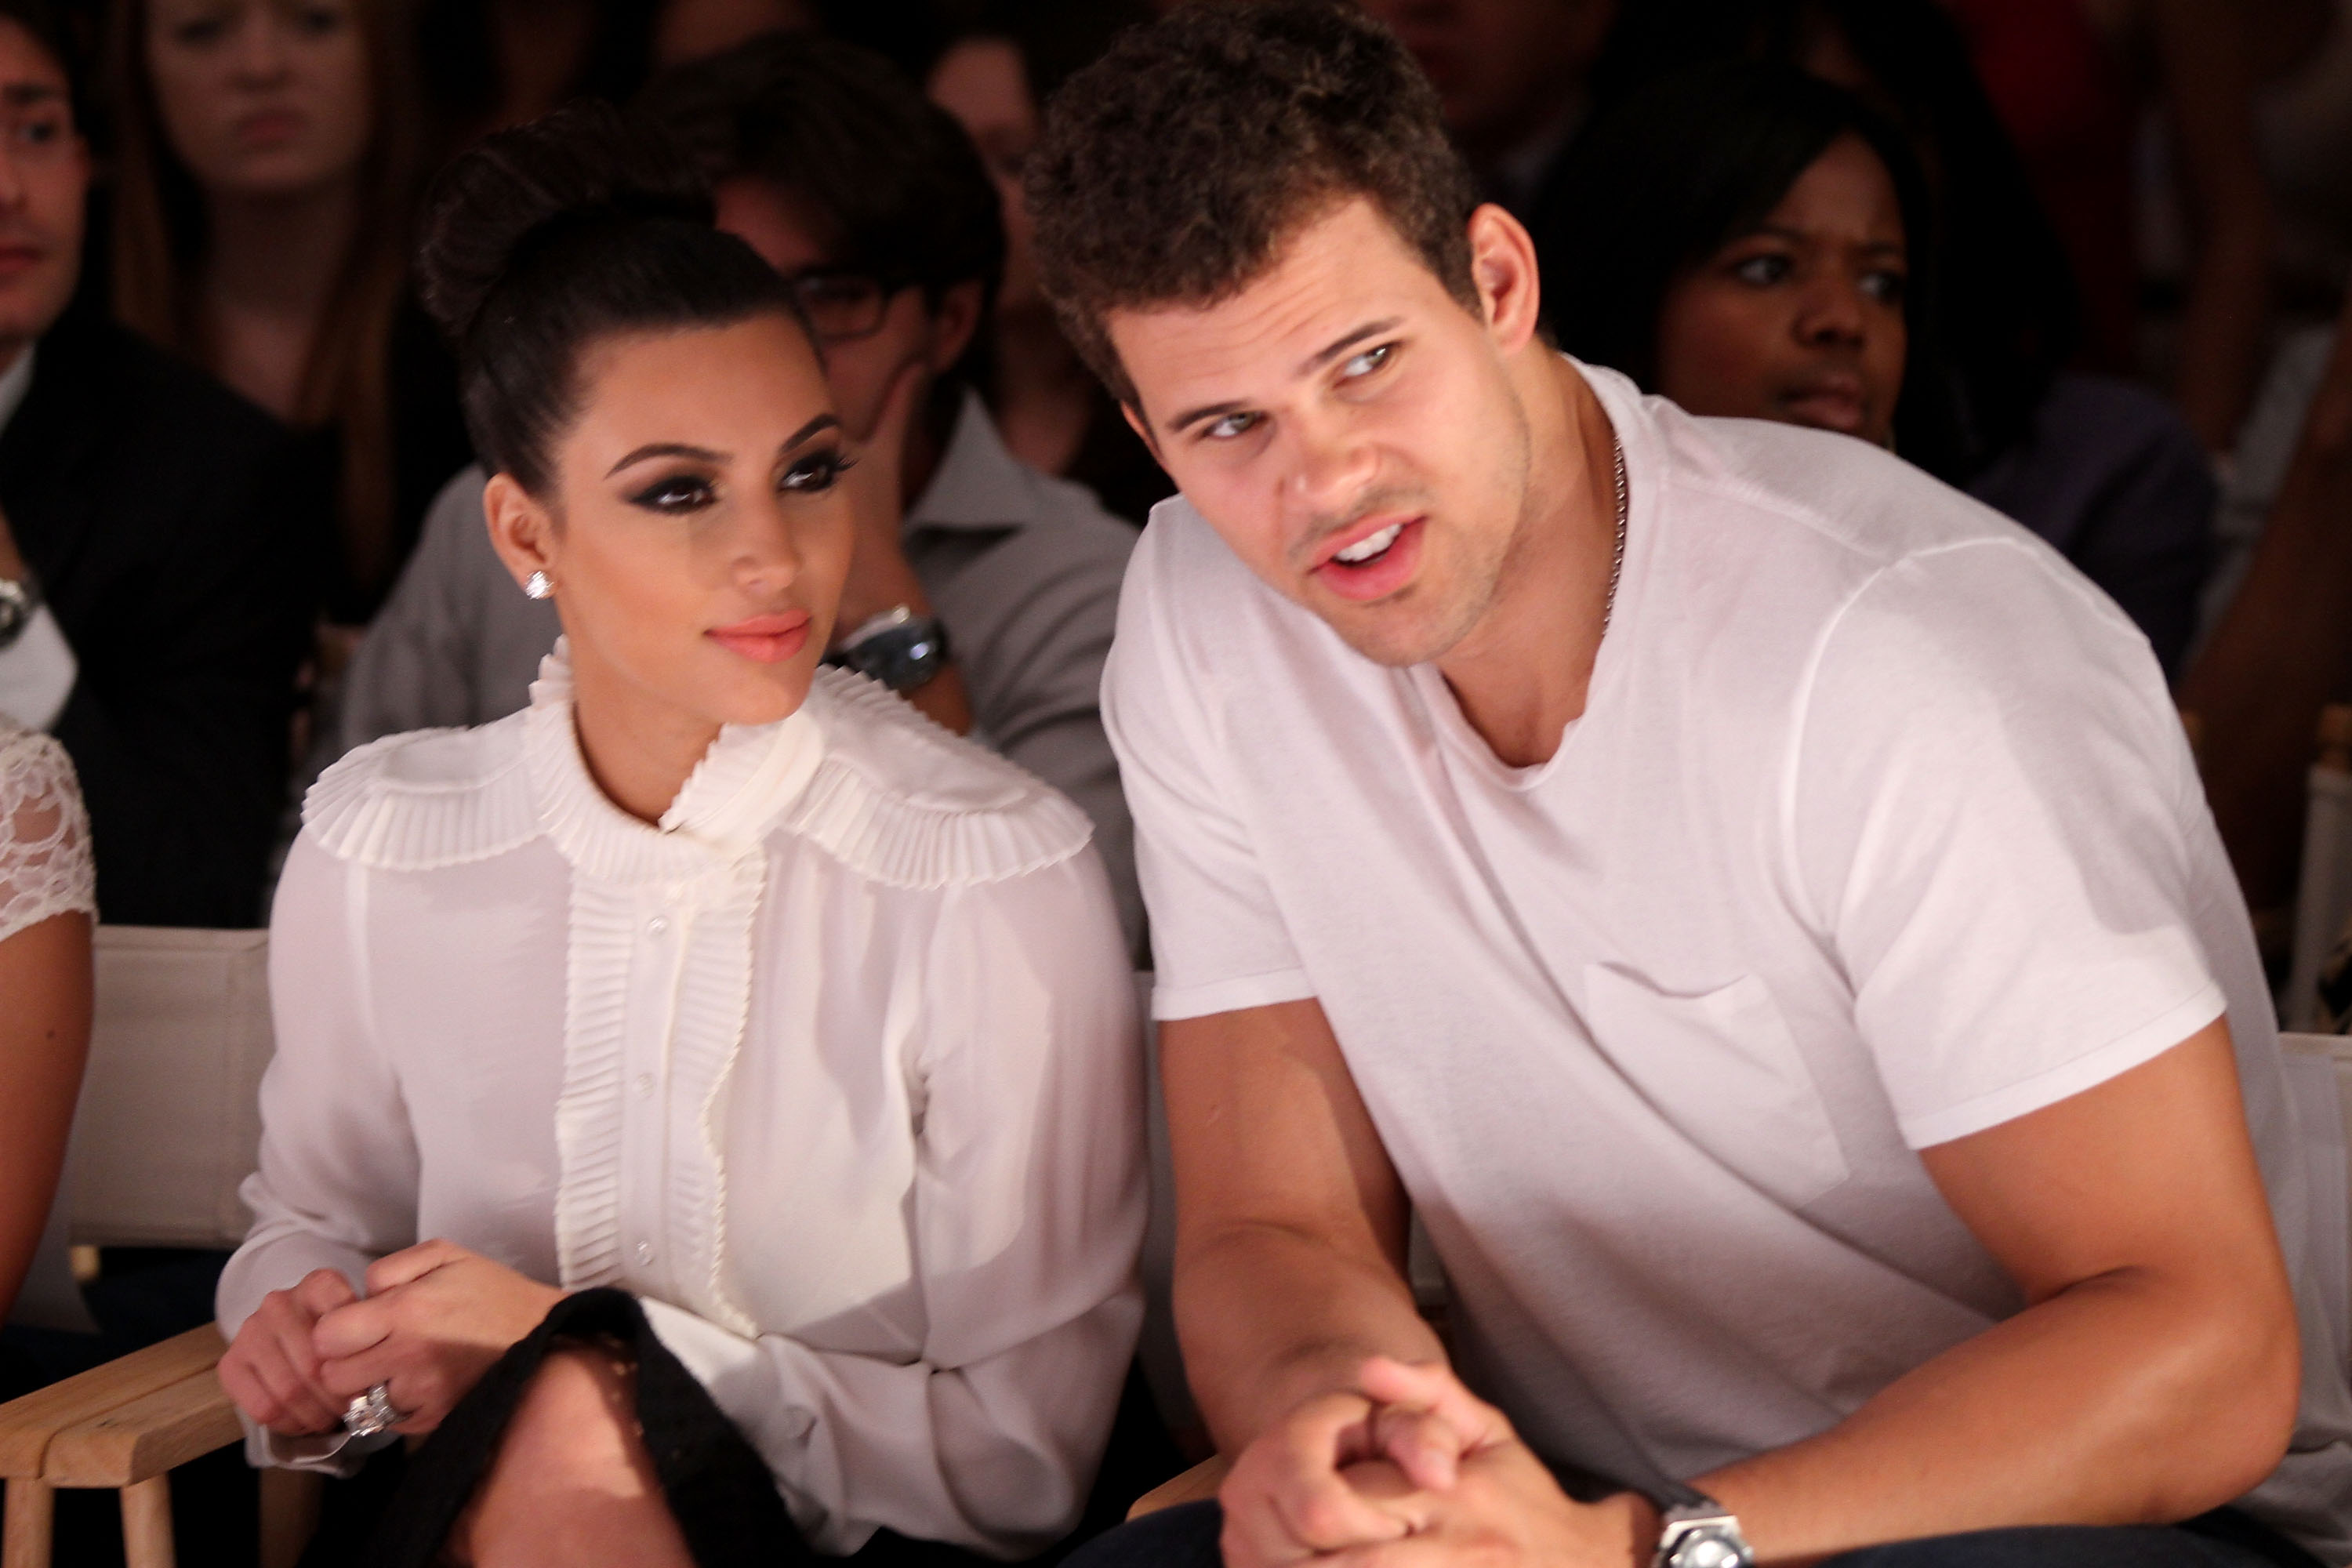 Kim Kardashian West and Kris Humphries posing in white shirts at a Fashion Week event.